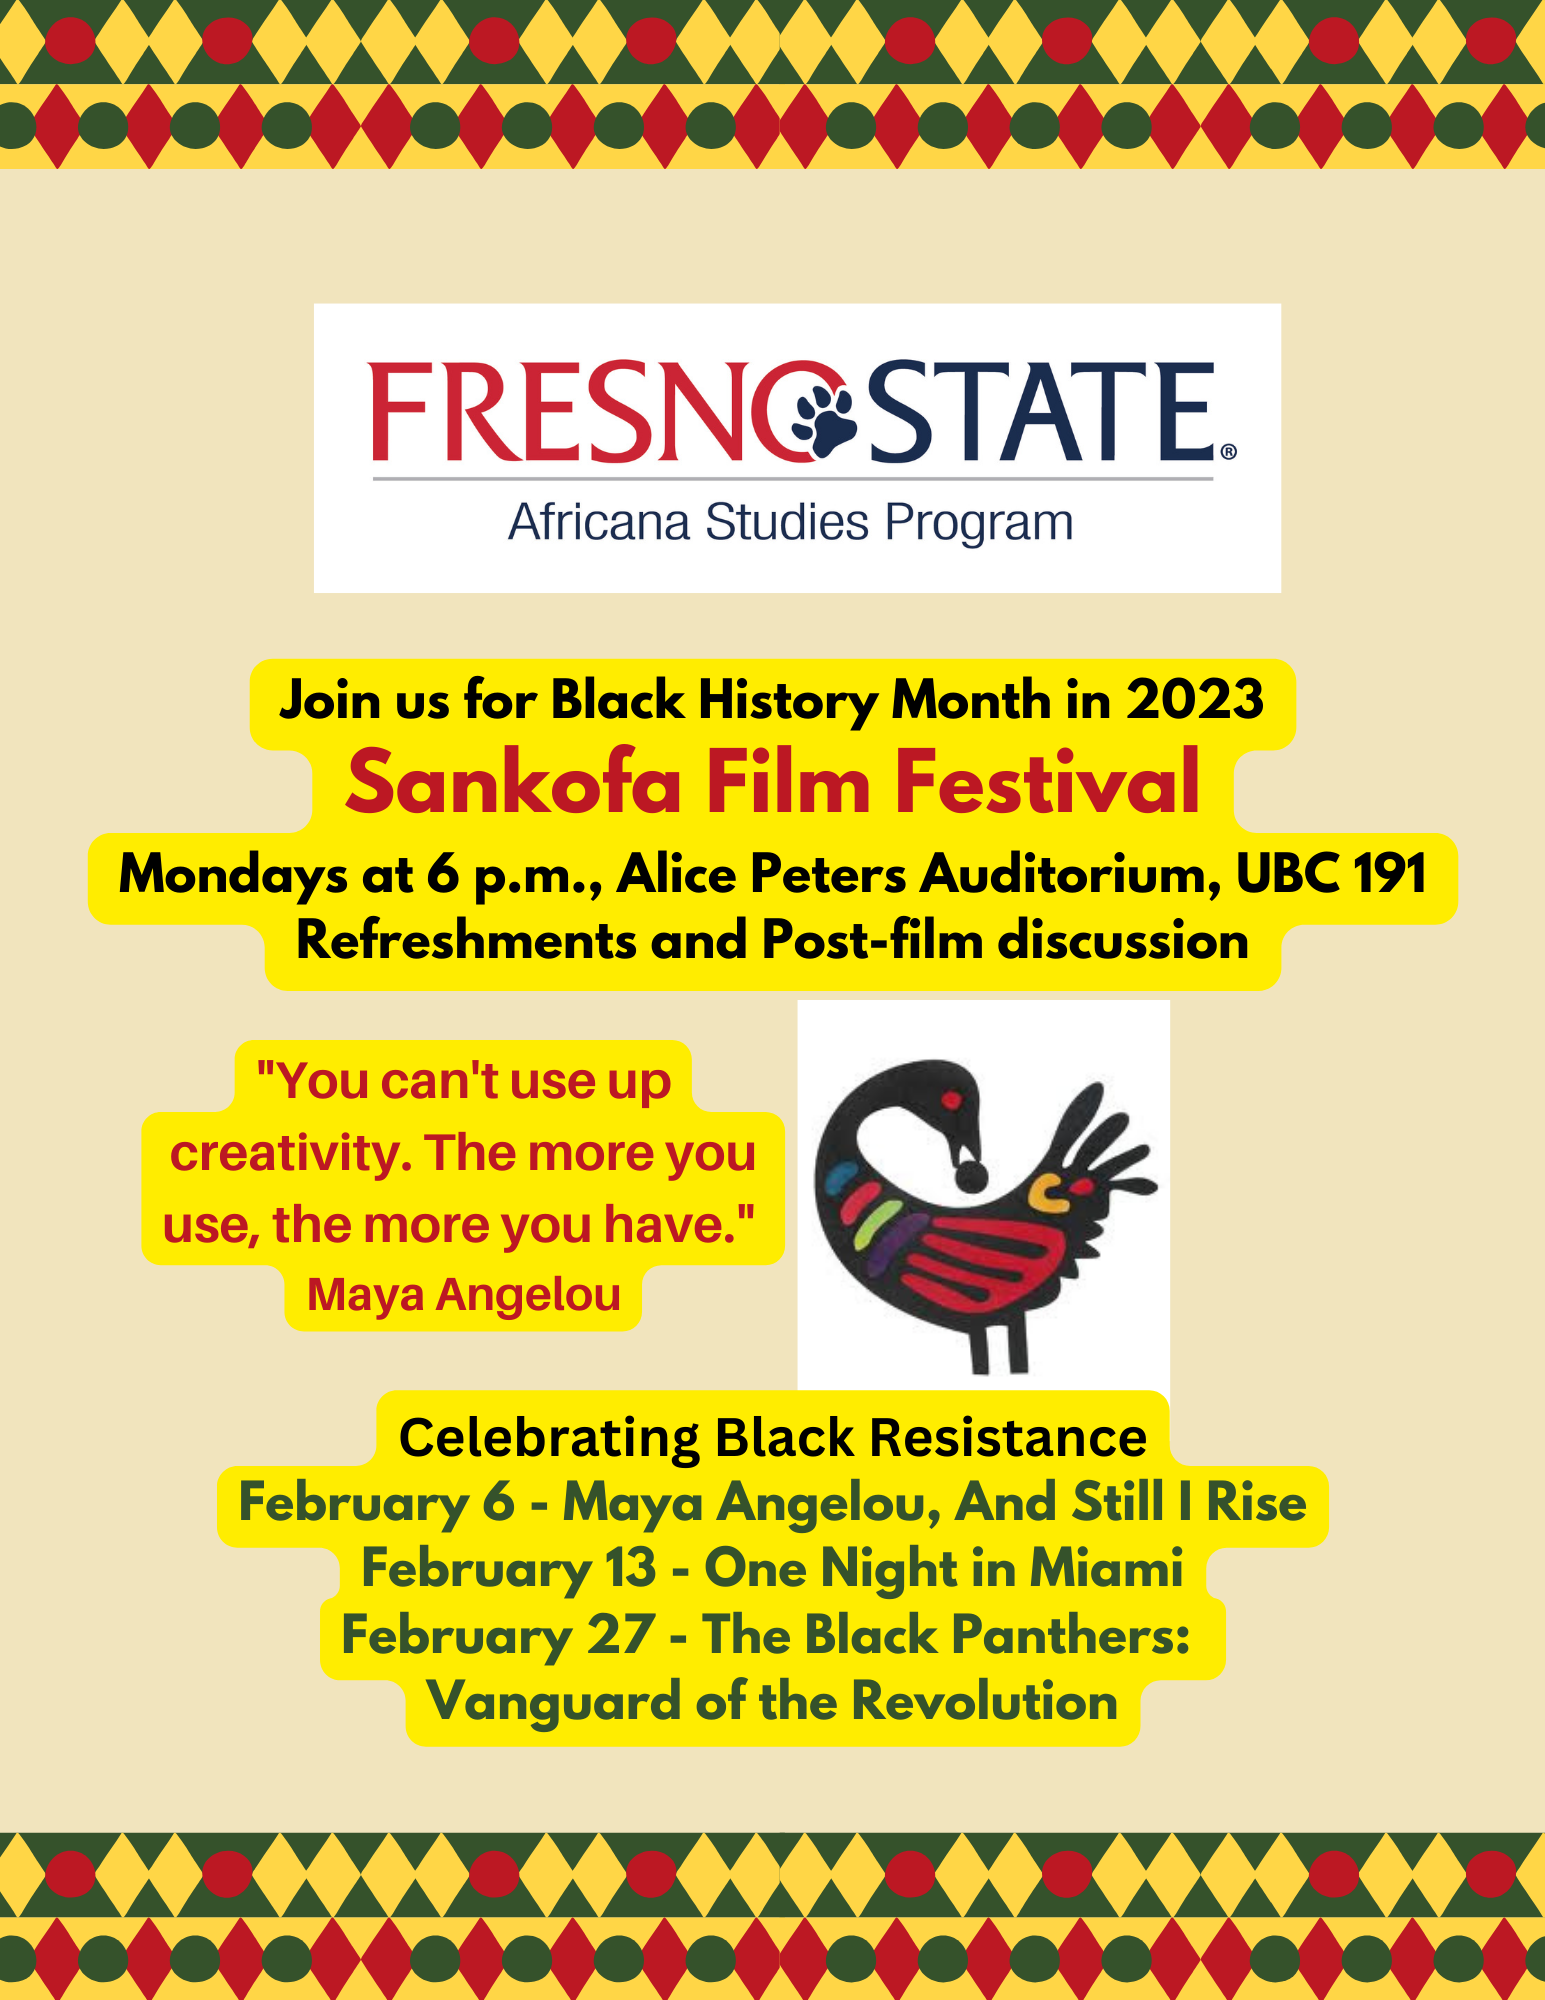 Sankofa Film Festival Dates for Feburary 